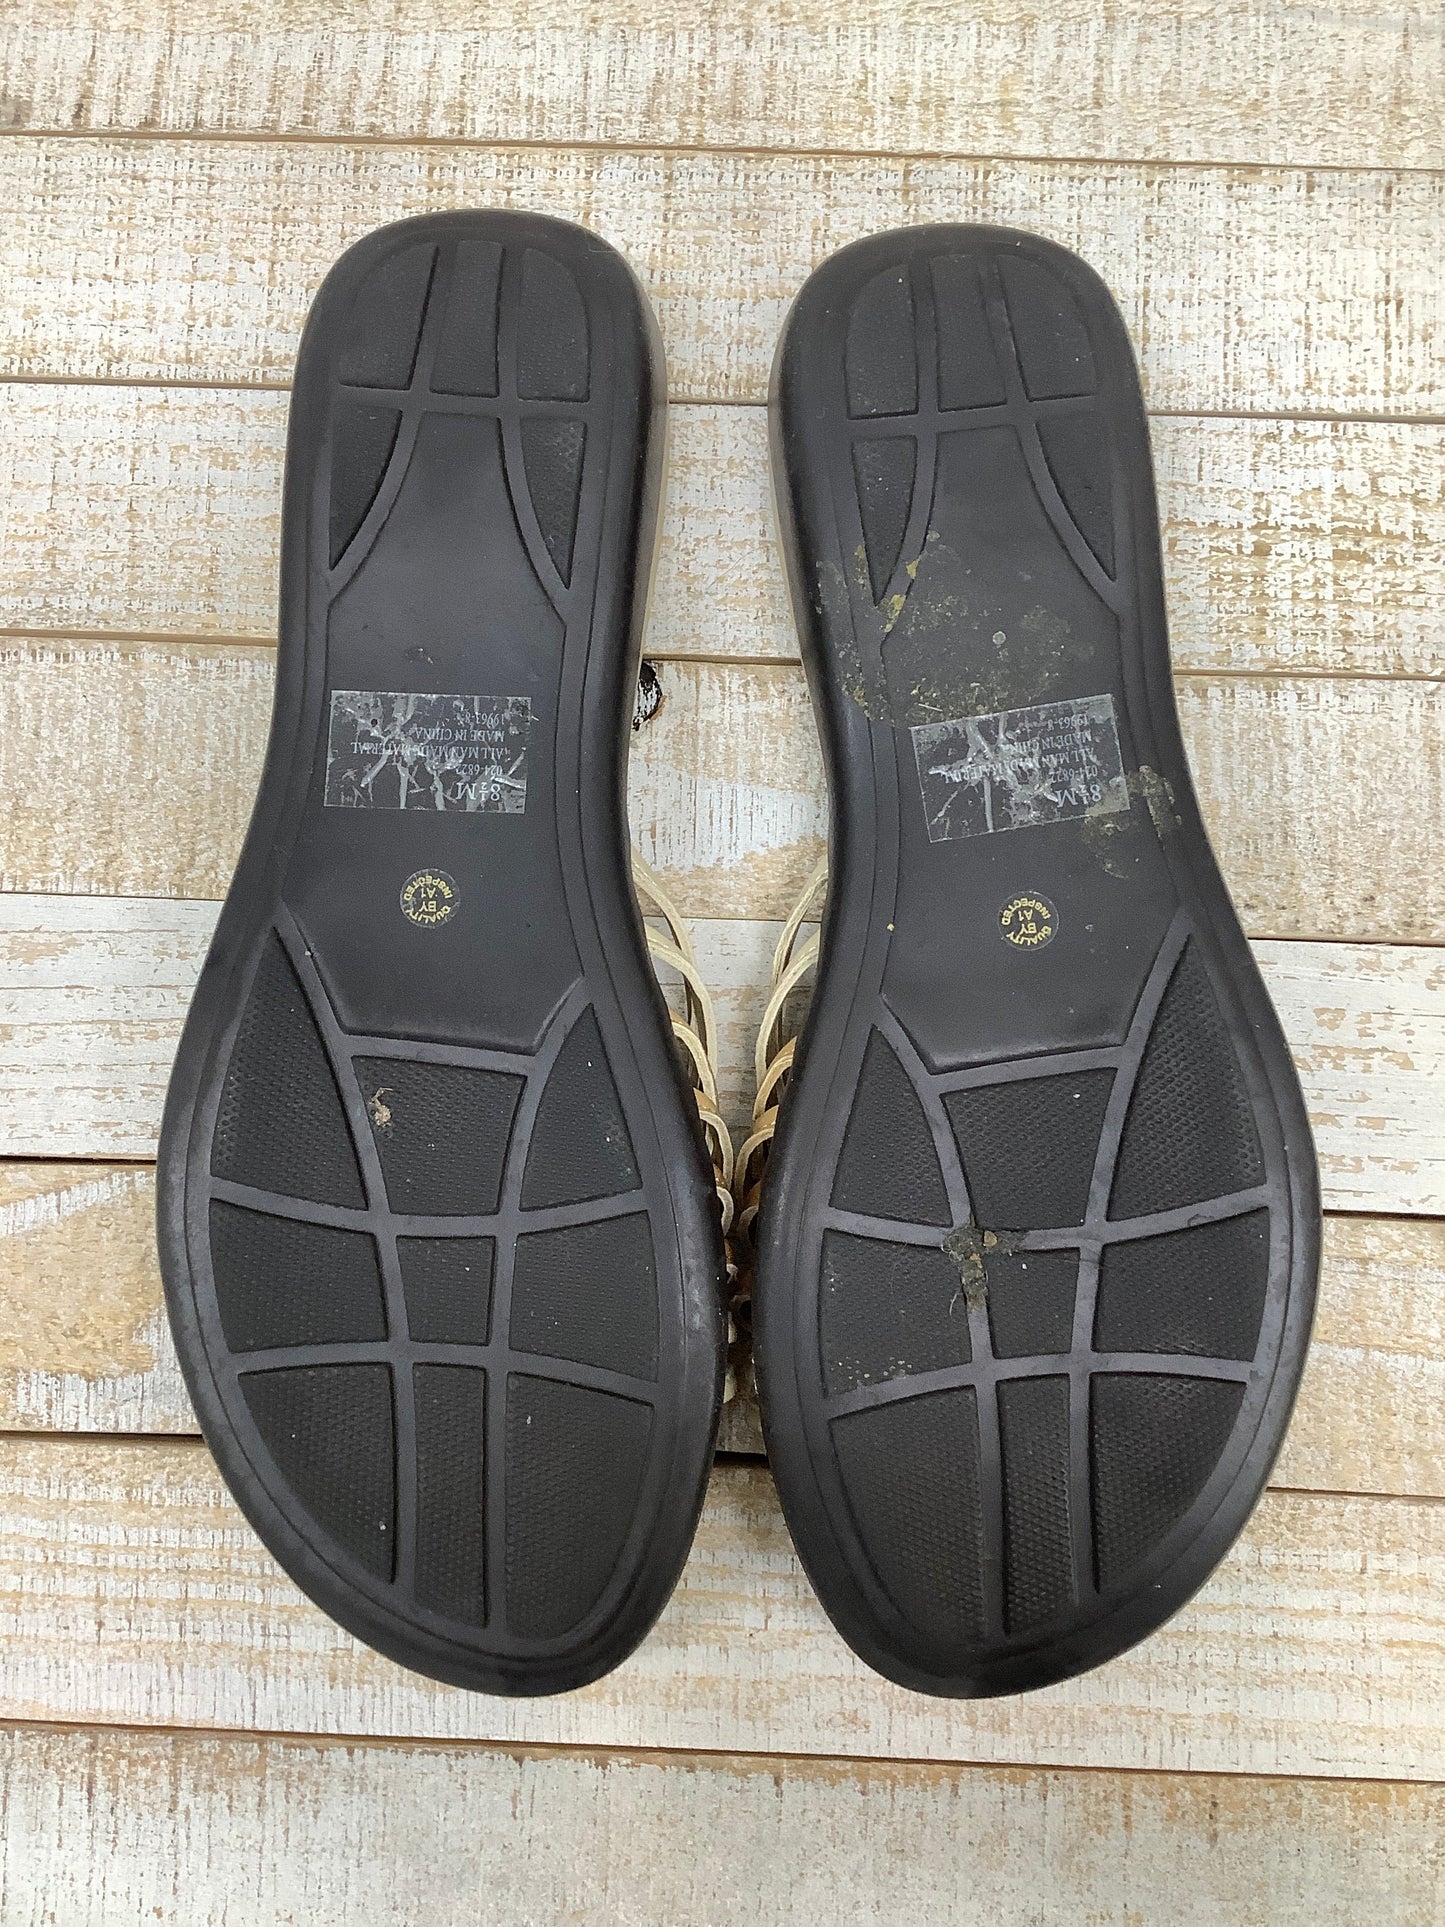 Sandals Heels Wedge By Cabin Creek  Size: 8.5